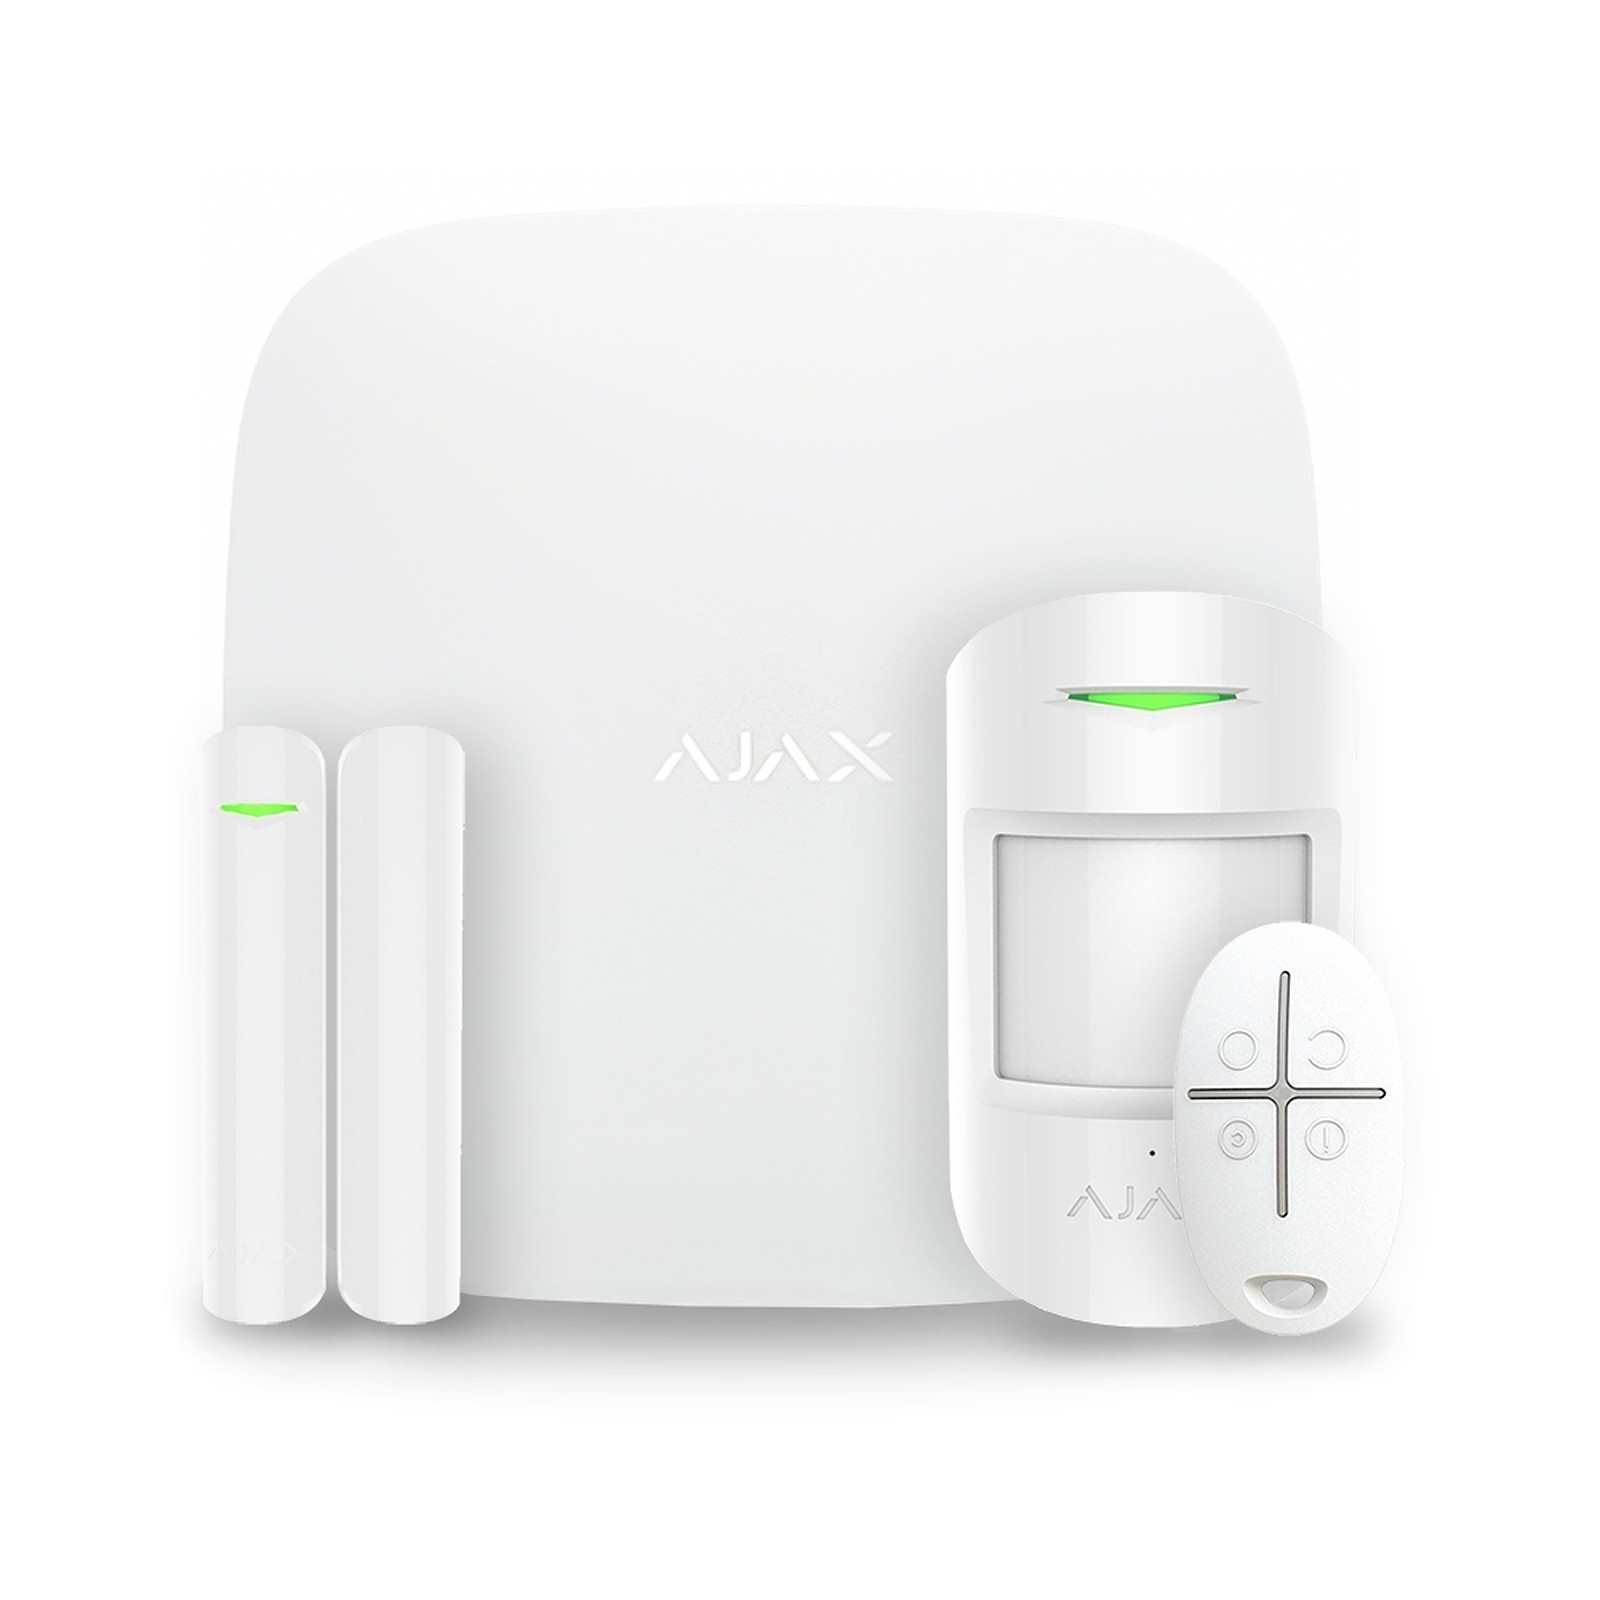 Alarme maison Ajax StarterKit Plus blanc - Kit alarme Ajax Systems